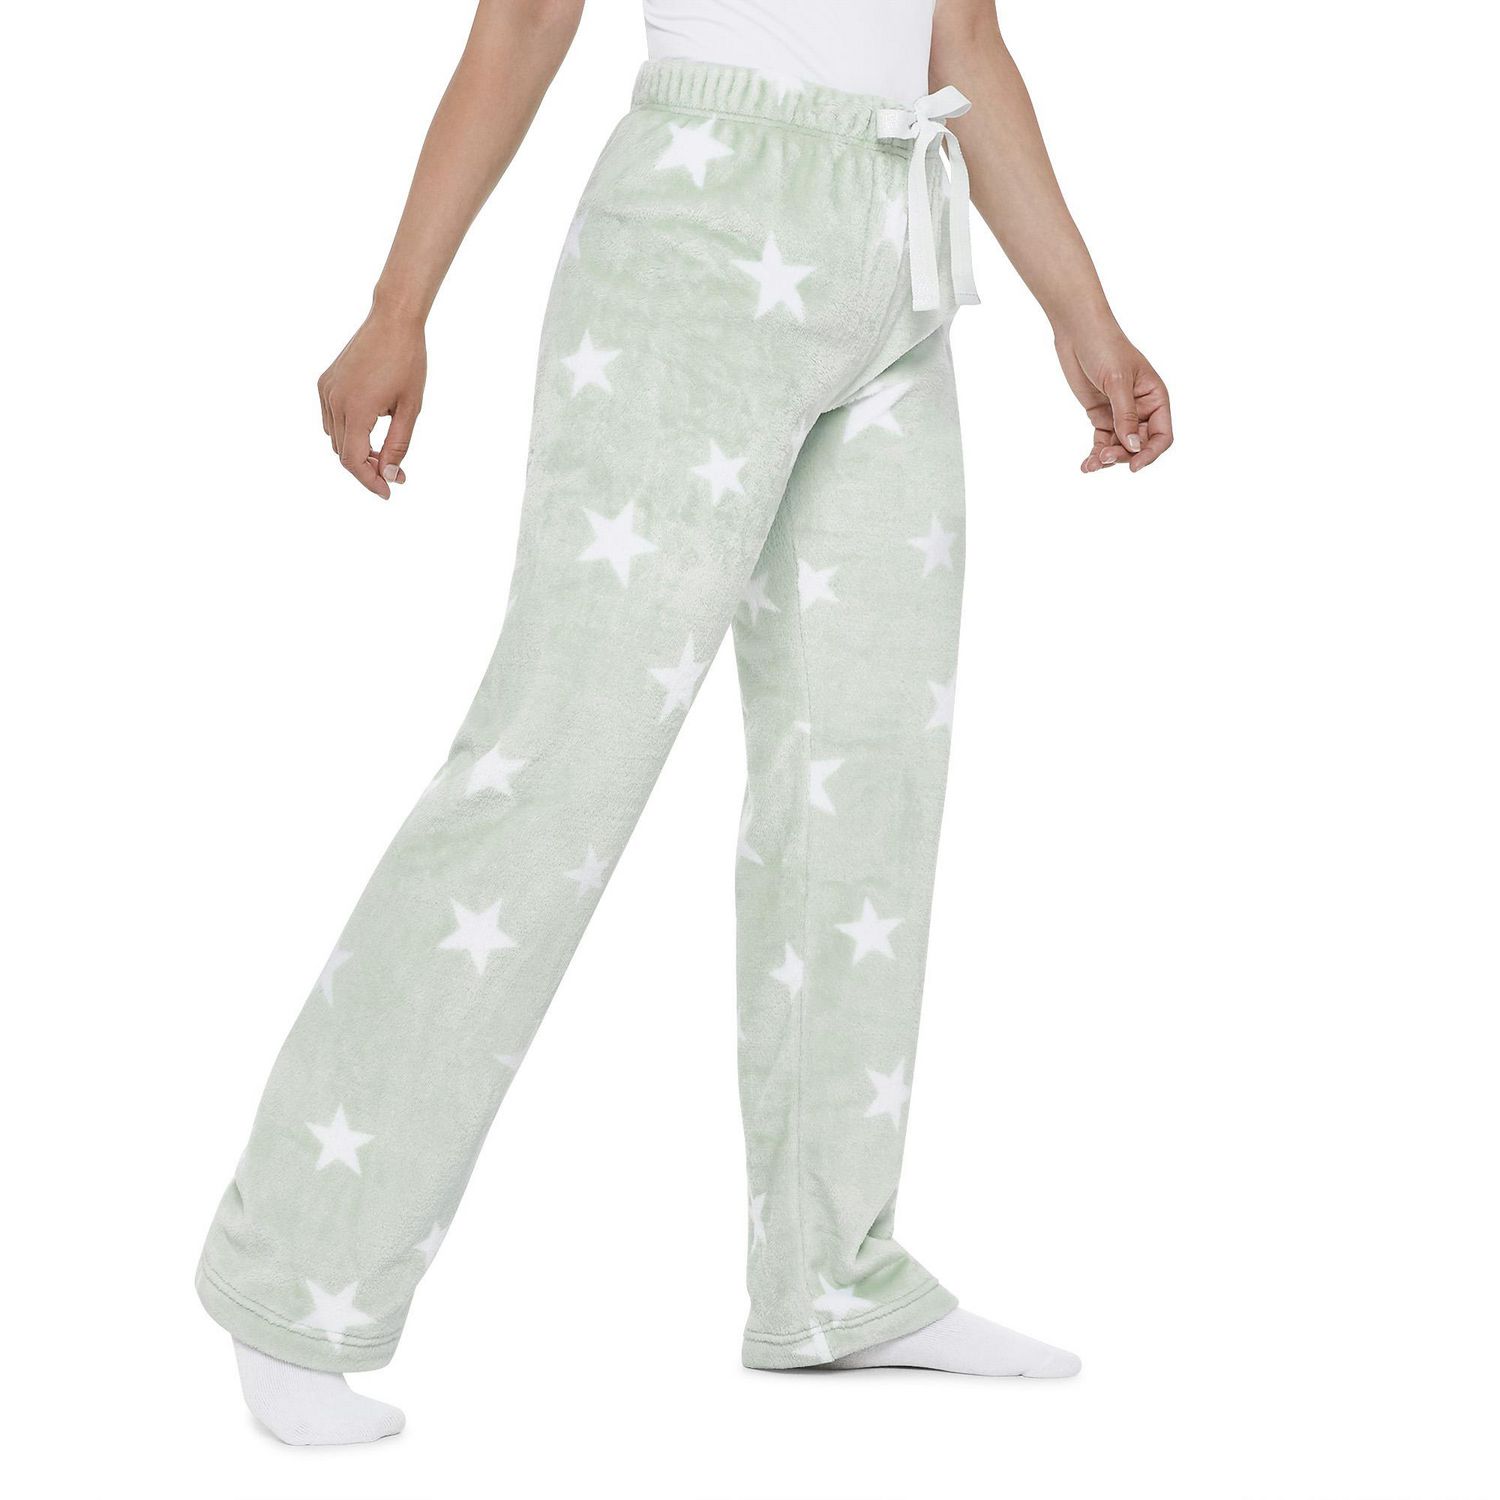  Womens Plush Pajama Pants 6994-529-2X